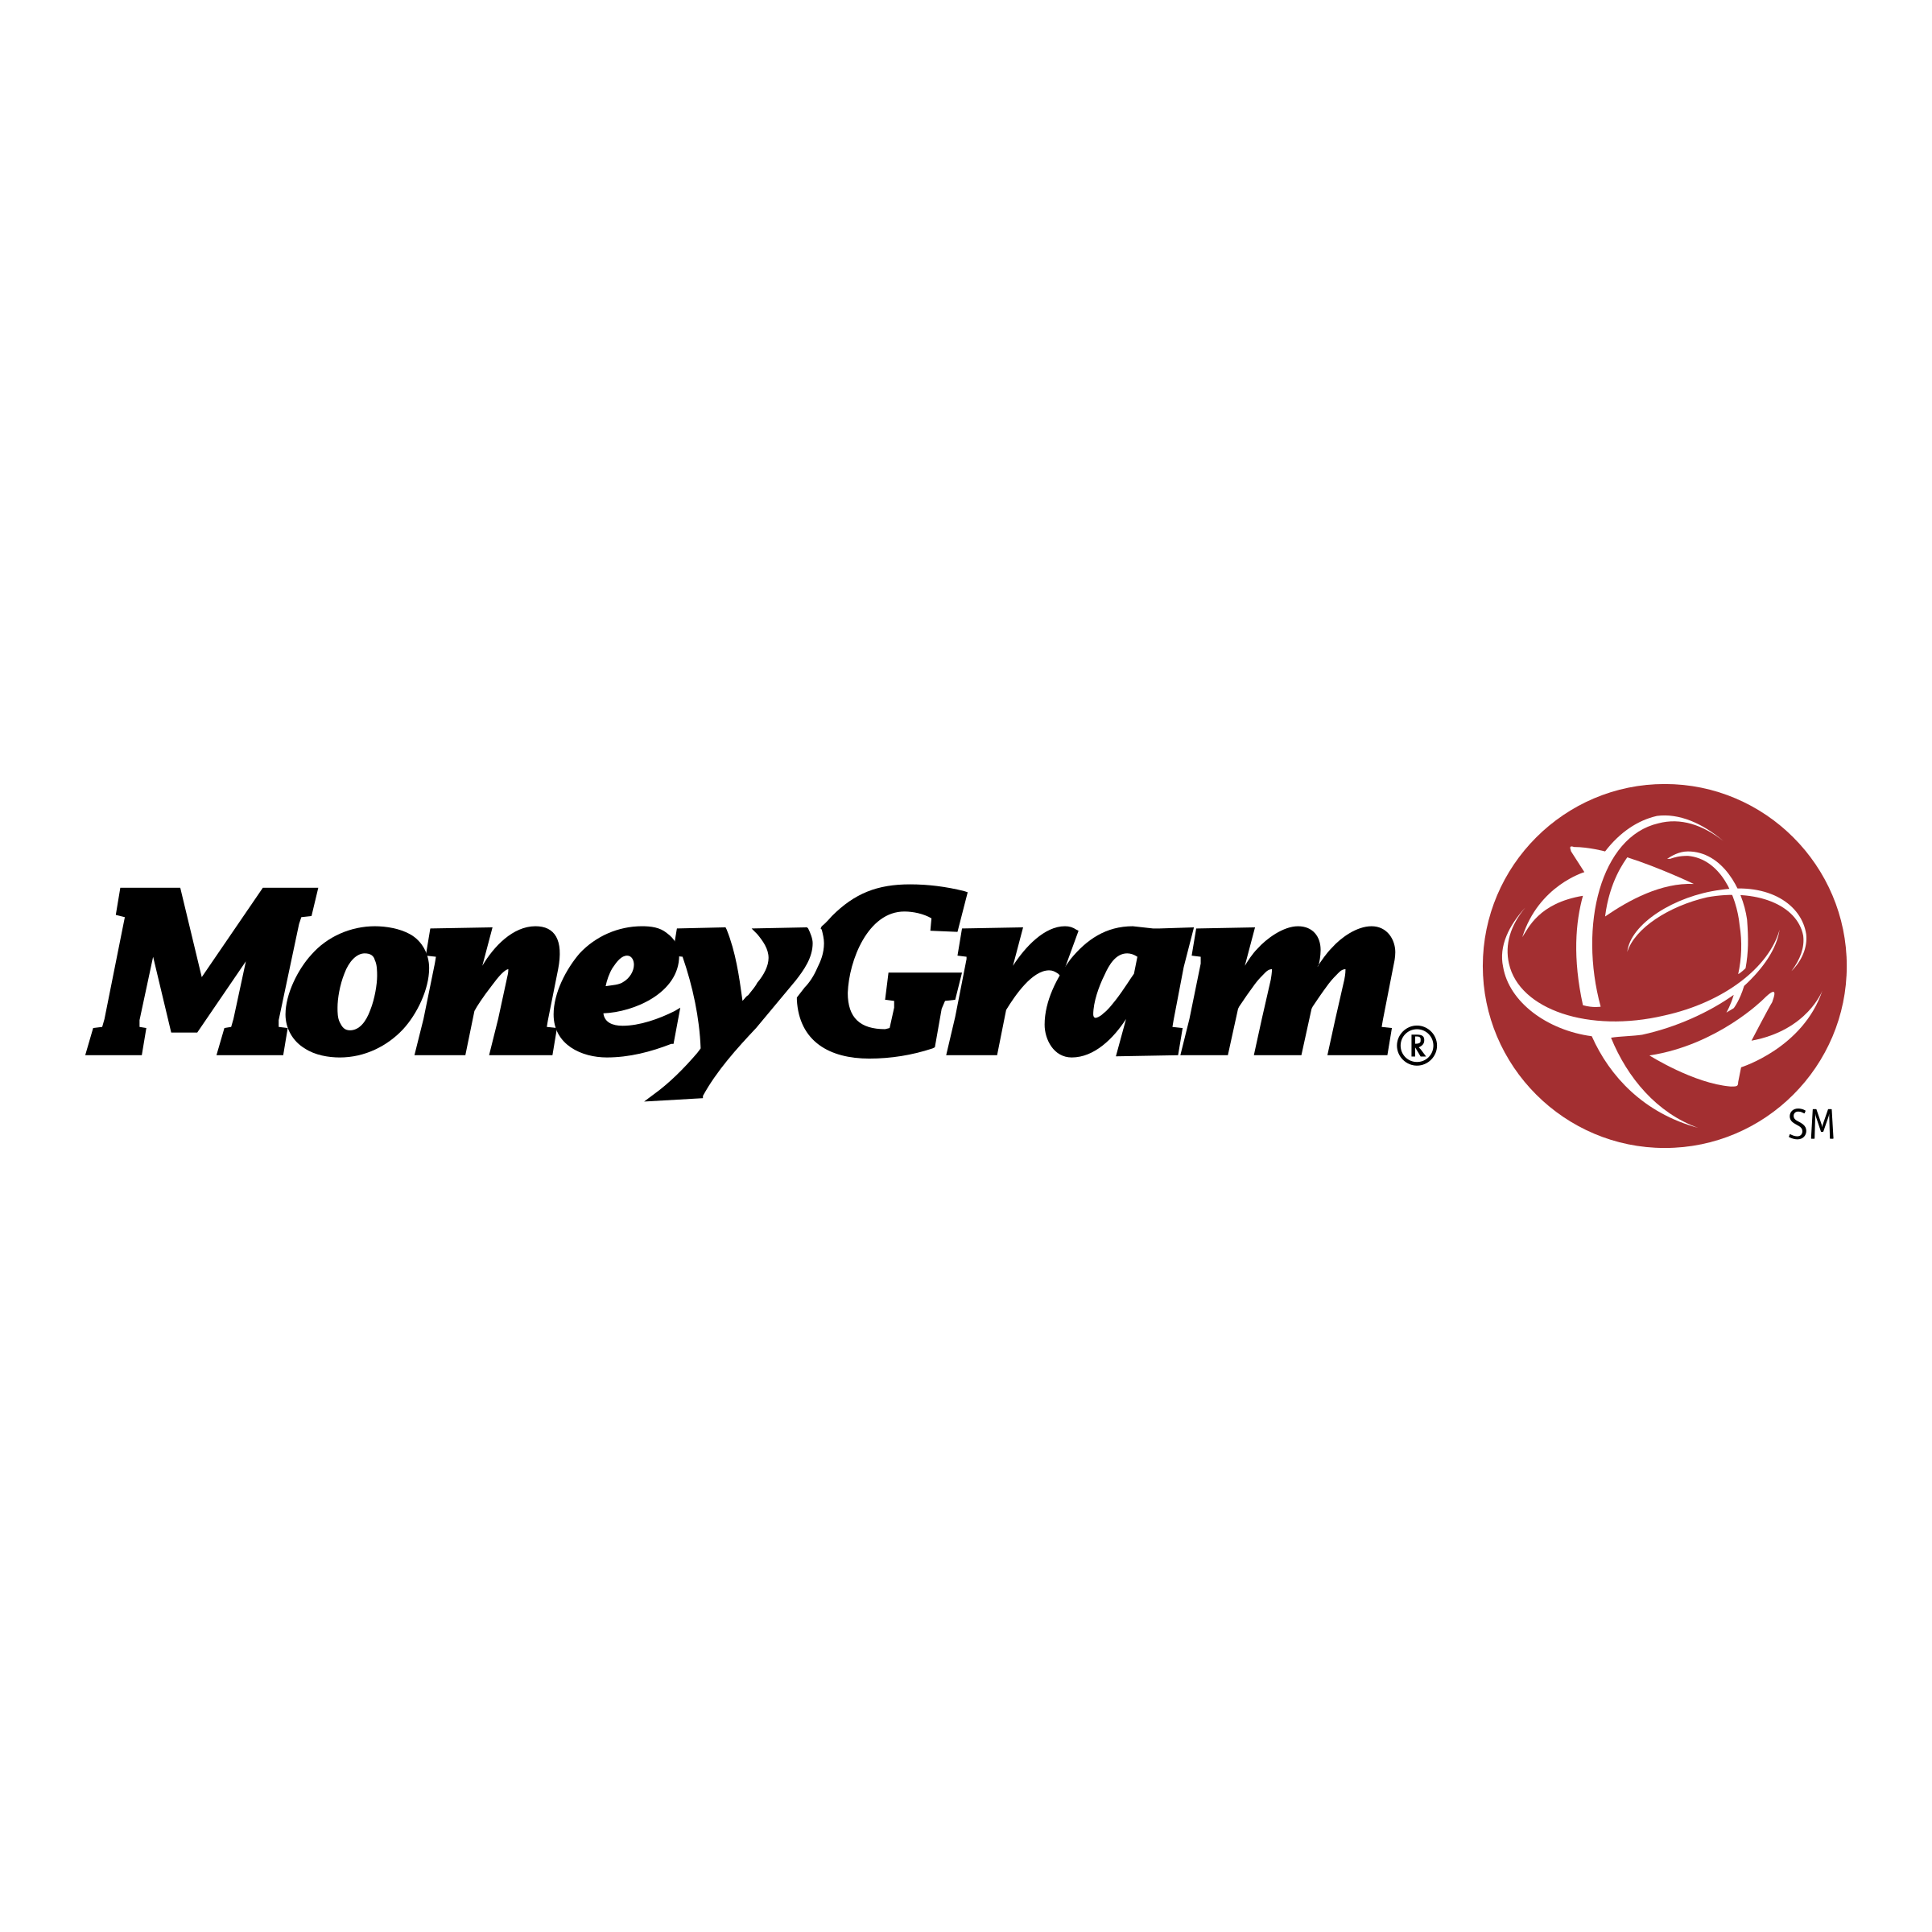 Monet Logo PNG Transparent & SVG Vector - Freebie Supply